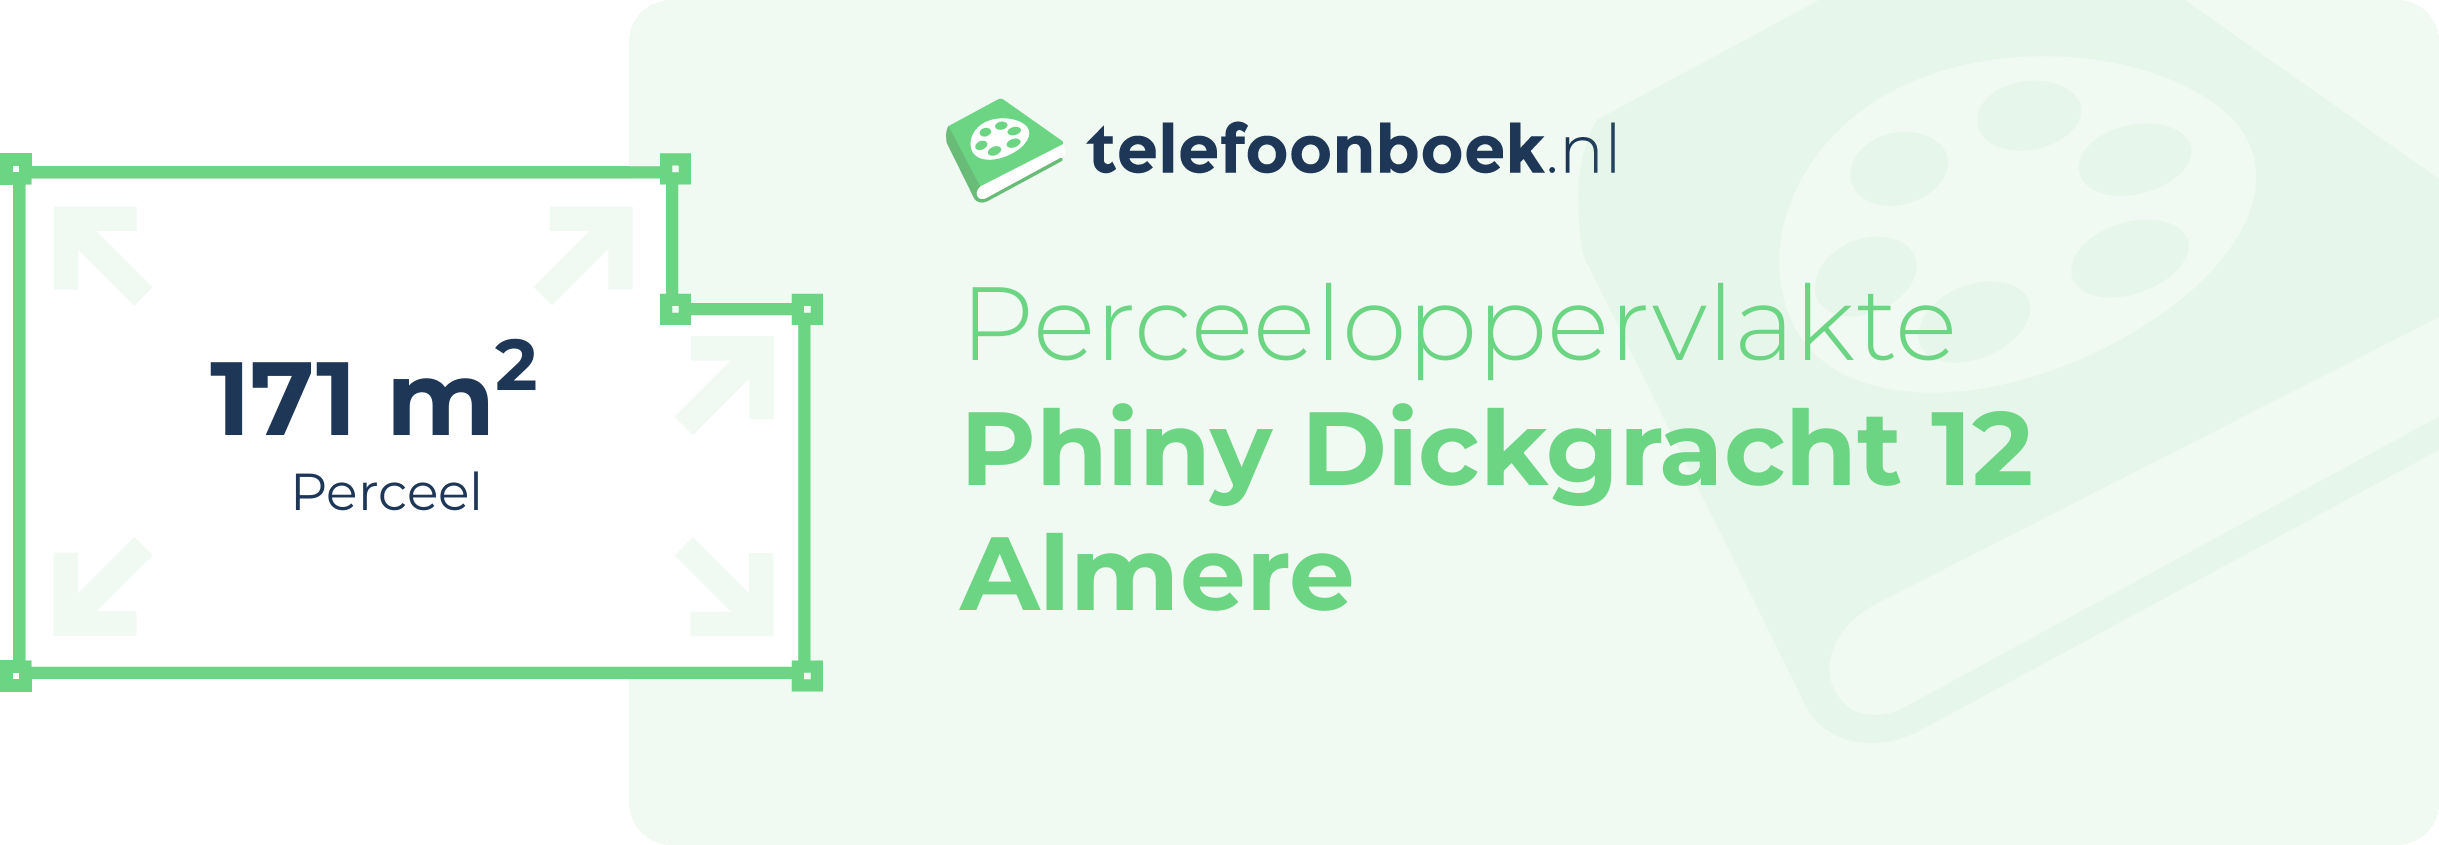 Perceeloppervlakte Phiny Dickgracht 12 Almere